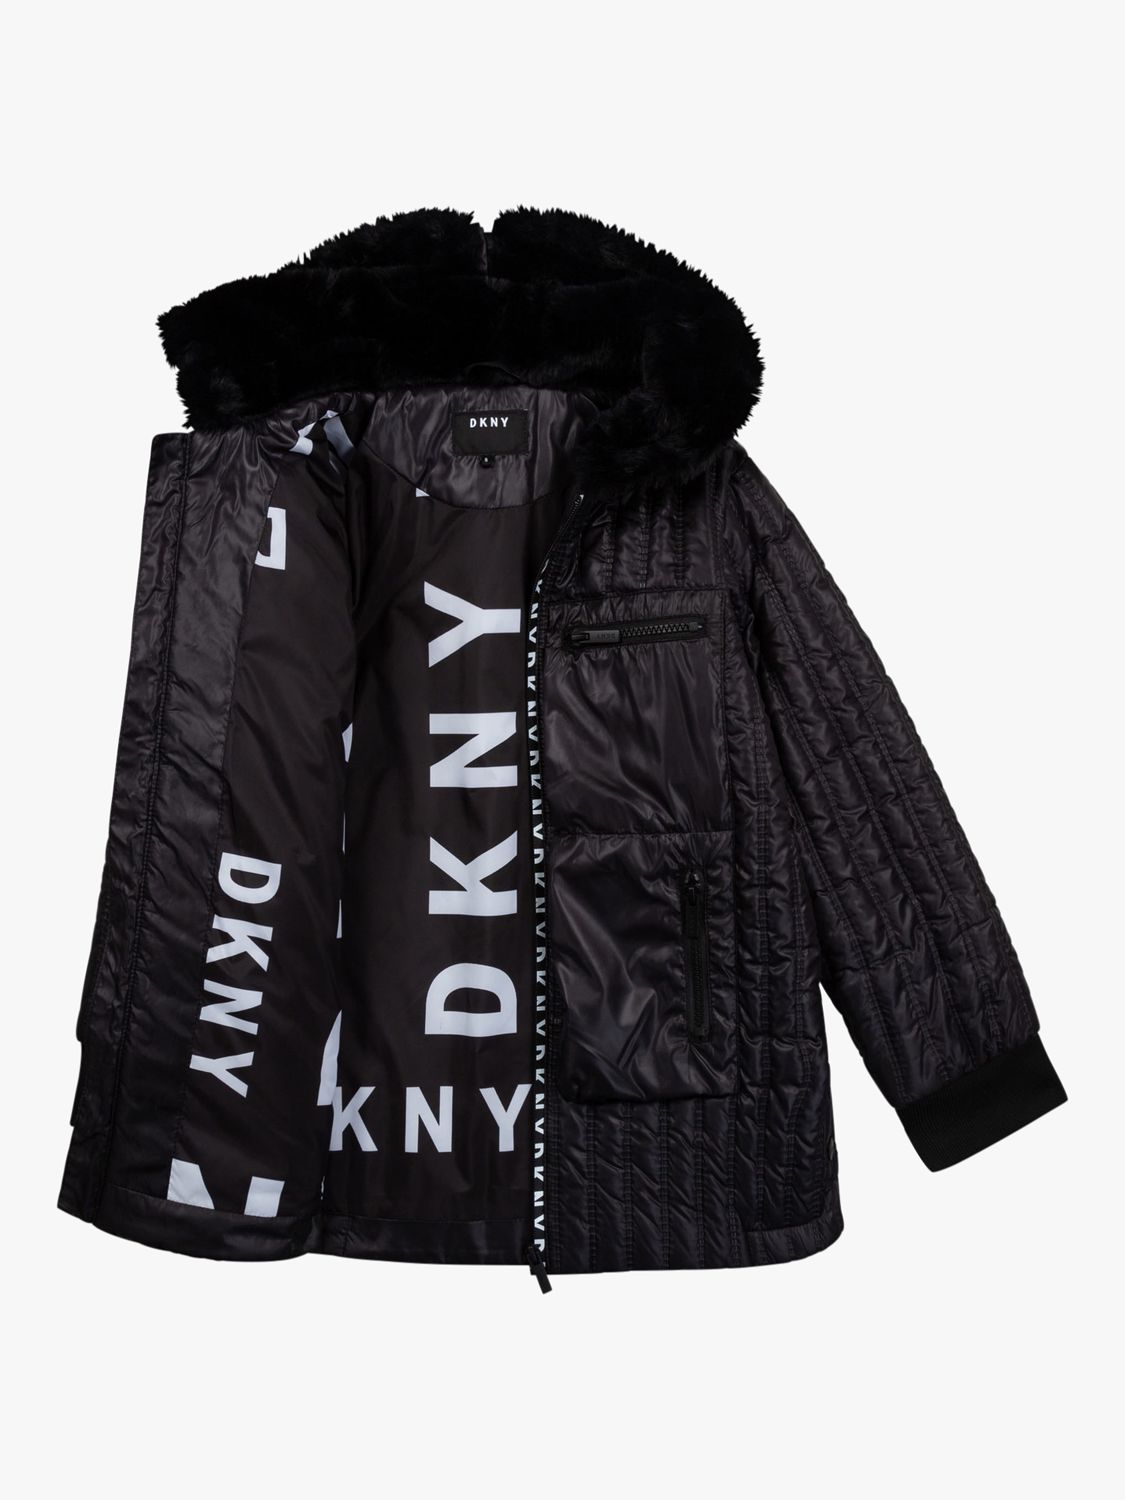 DKNY Kids' Hooded Parka Jacket, Black at John Lewis u0026 Partners